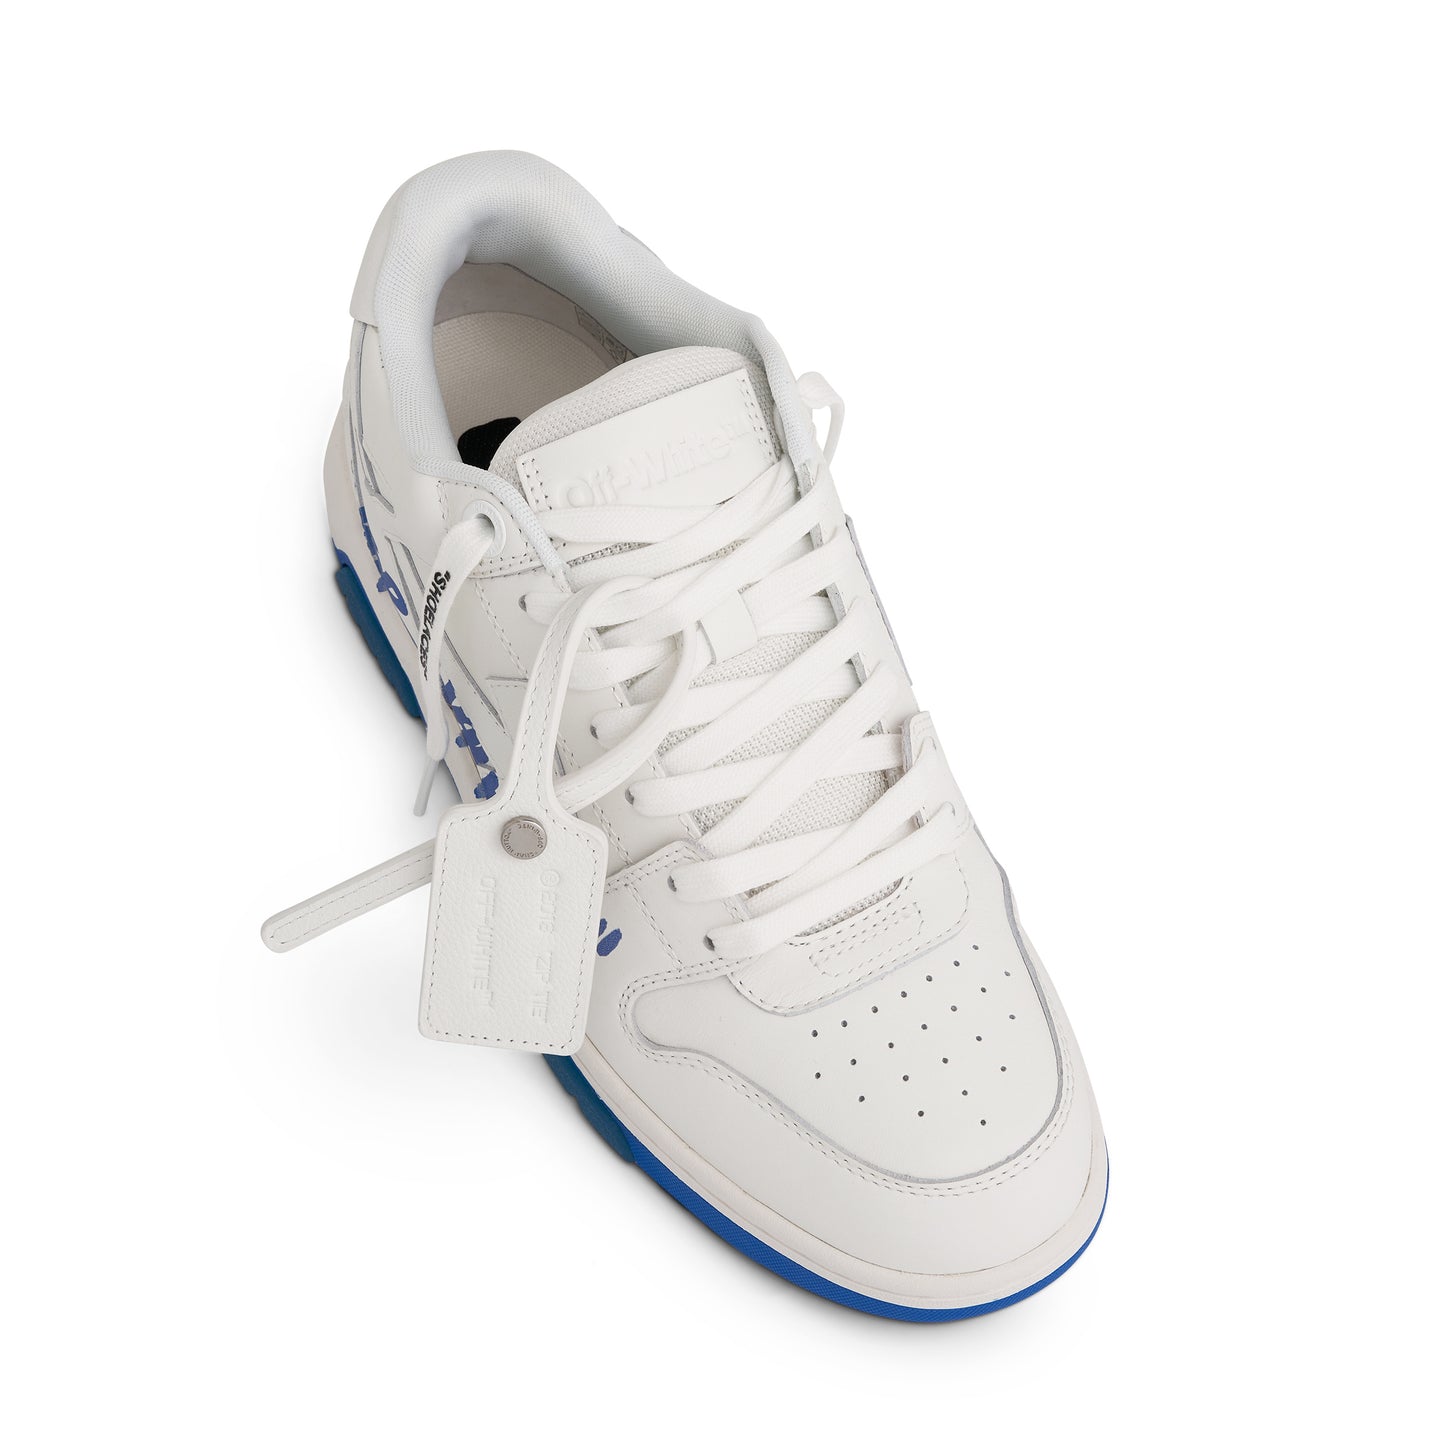 Out Of Office 'For Walking' Sneaker in White/Dusty Blue